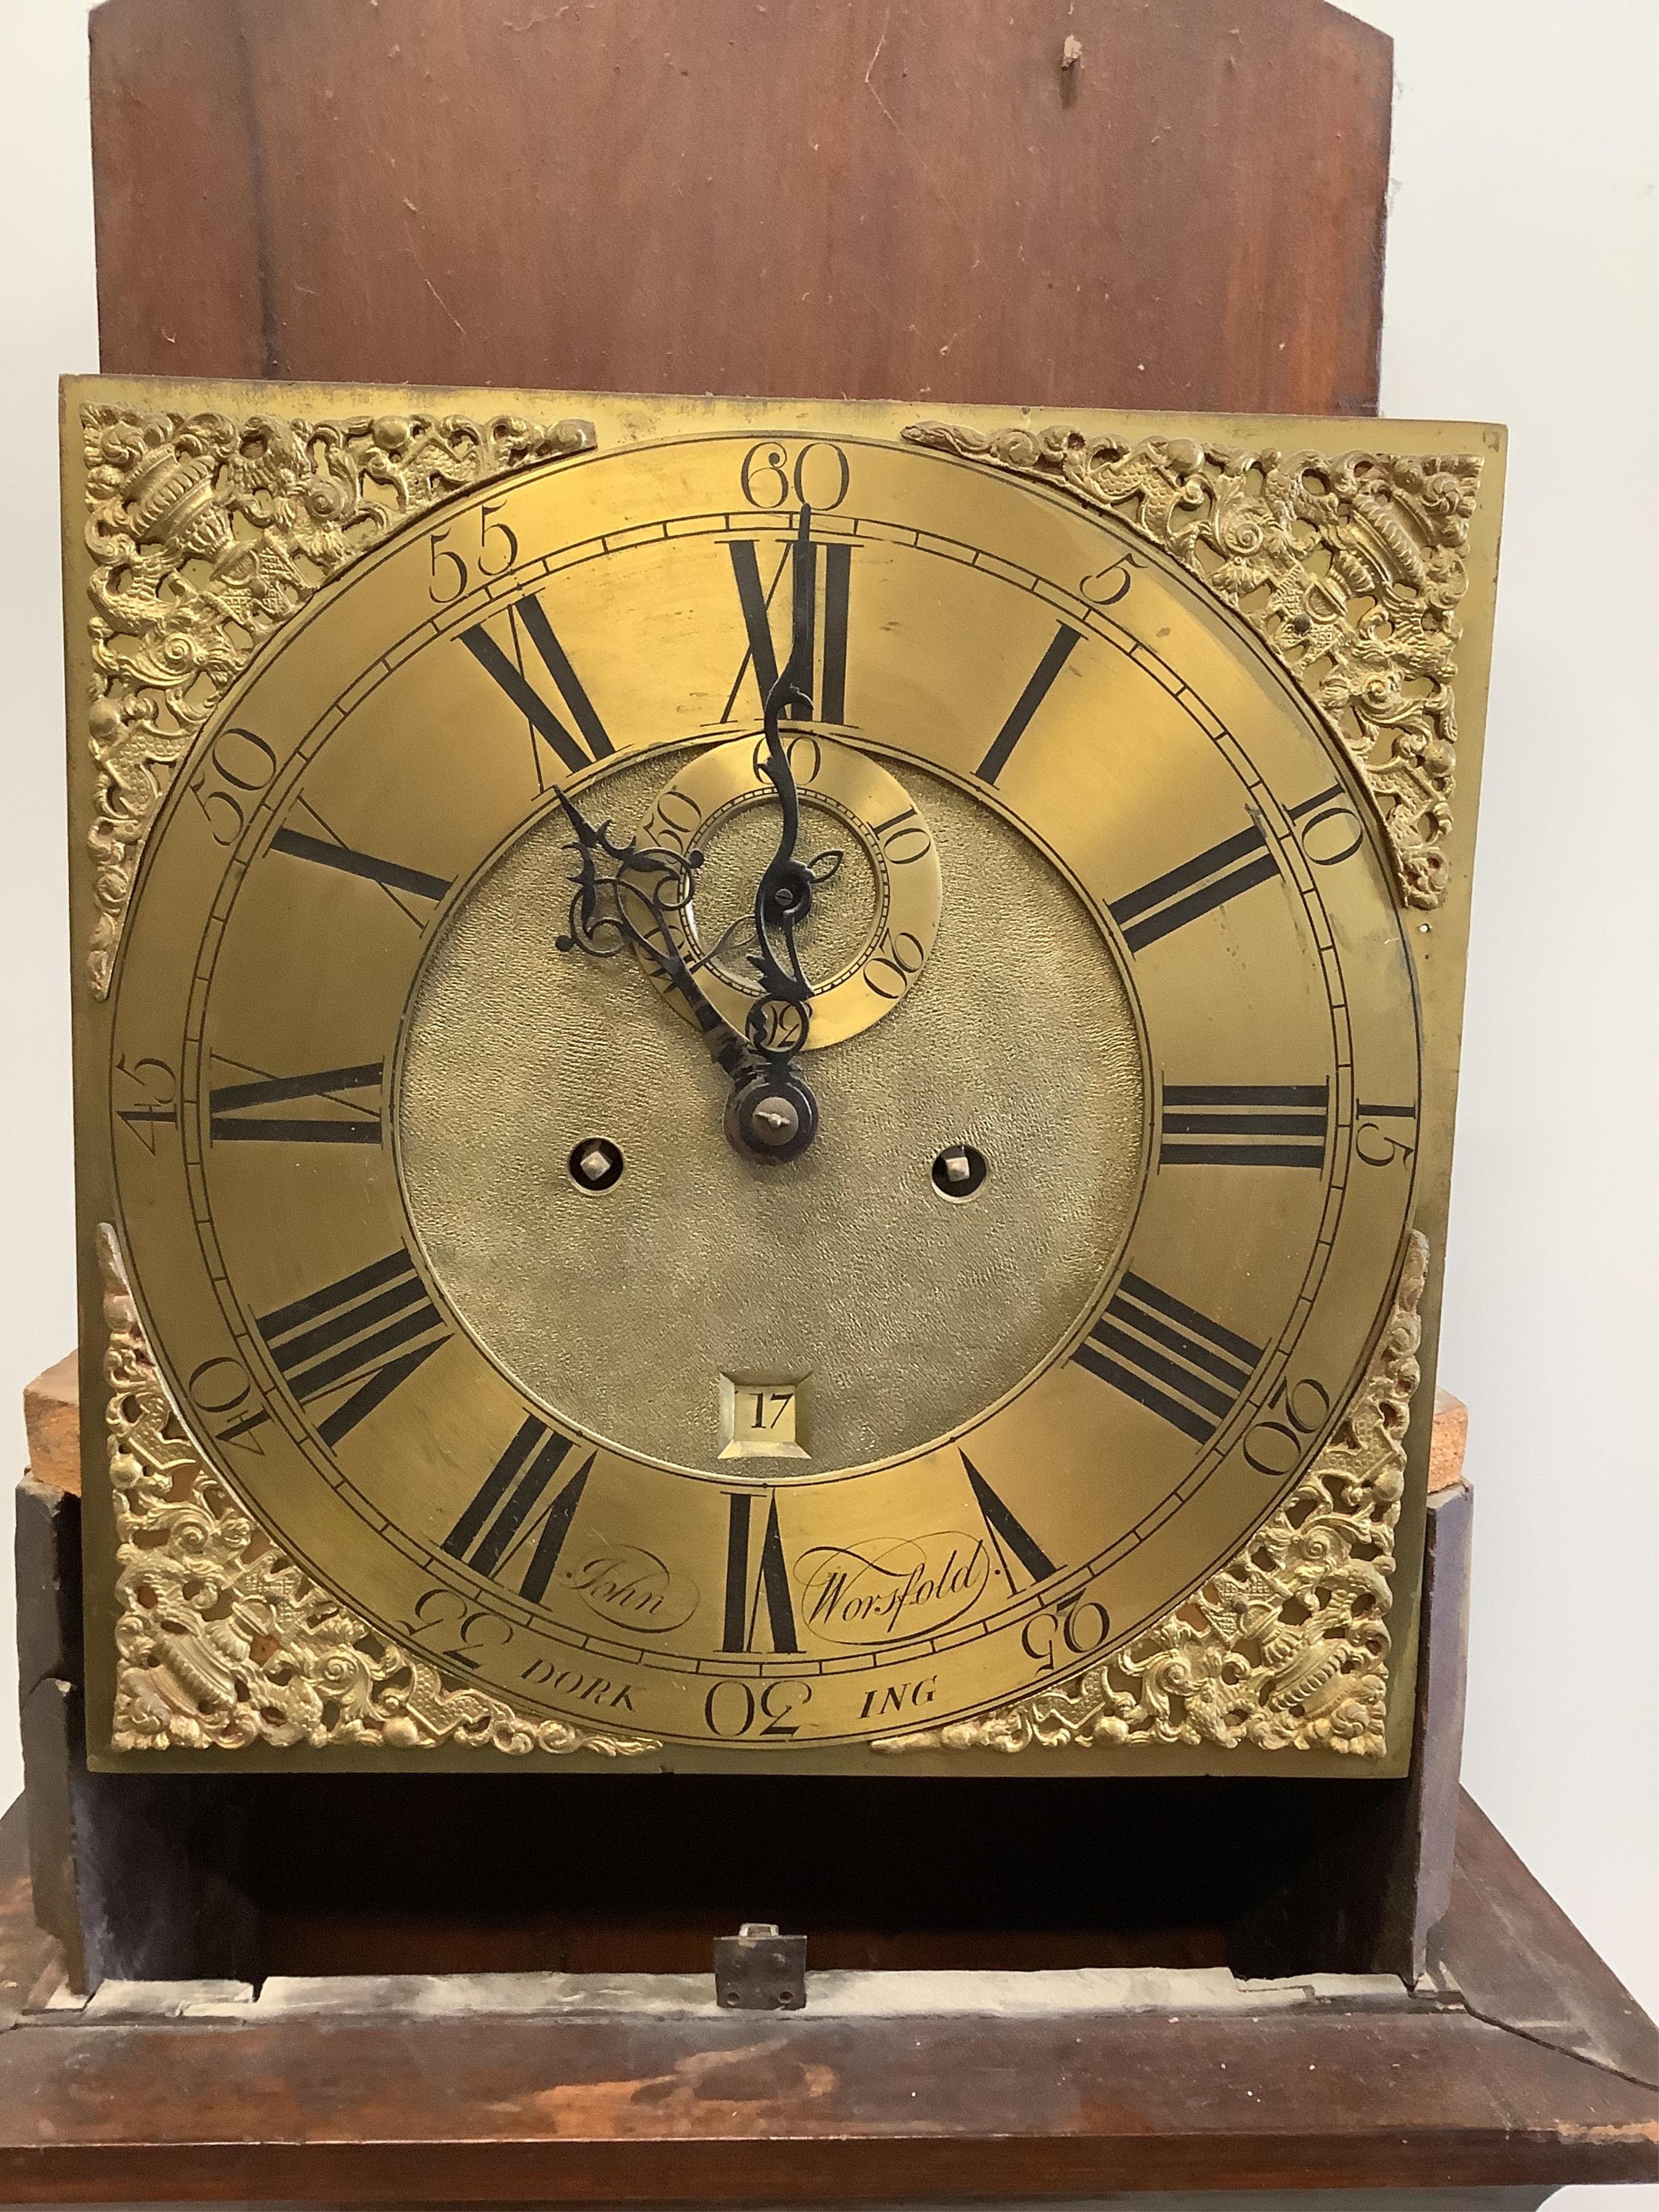 A George III style mahogany eight day longcase clock, marked John Worsfold, Dorking, height 199cm. Condition - fair